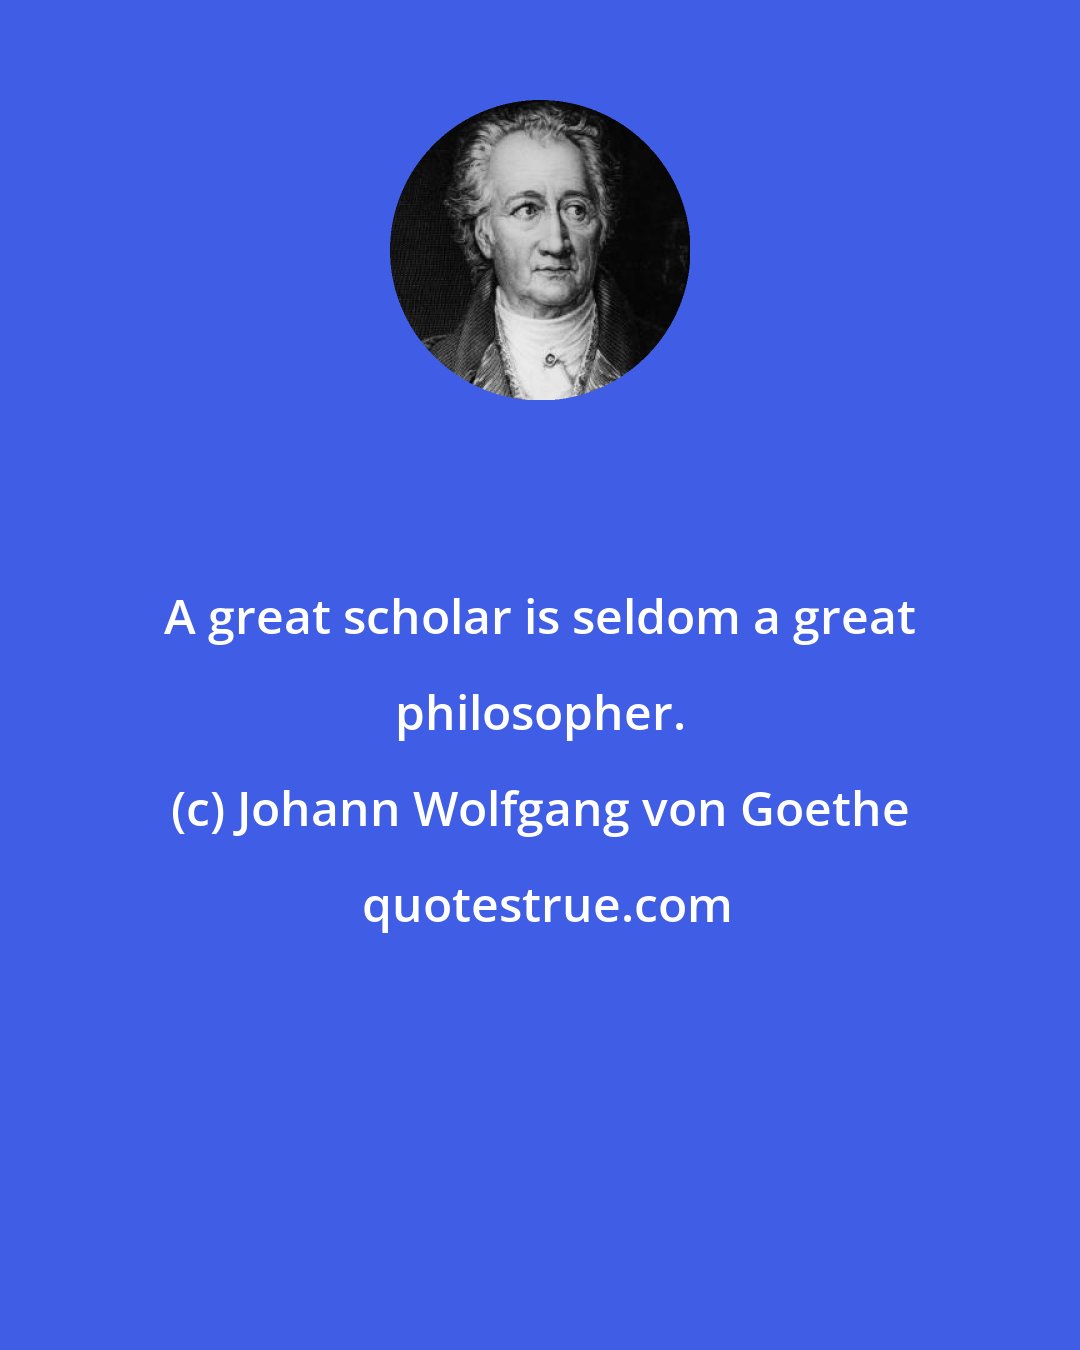 Johann Wolfgang von Goethe: A great scholar is seldom a great philosopher.